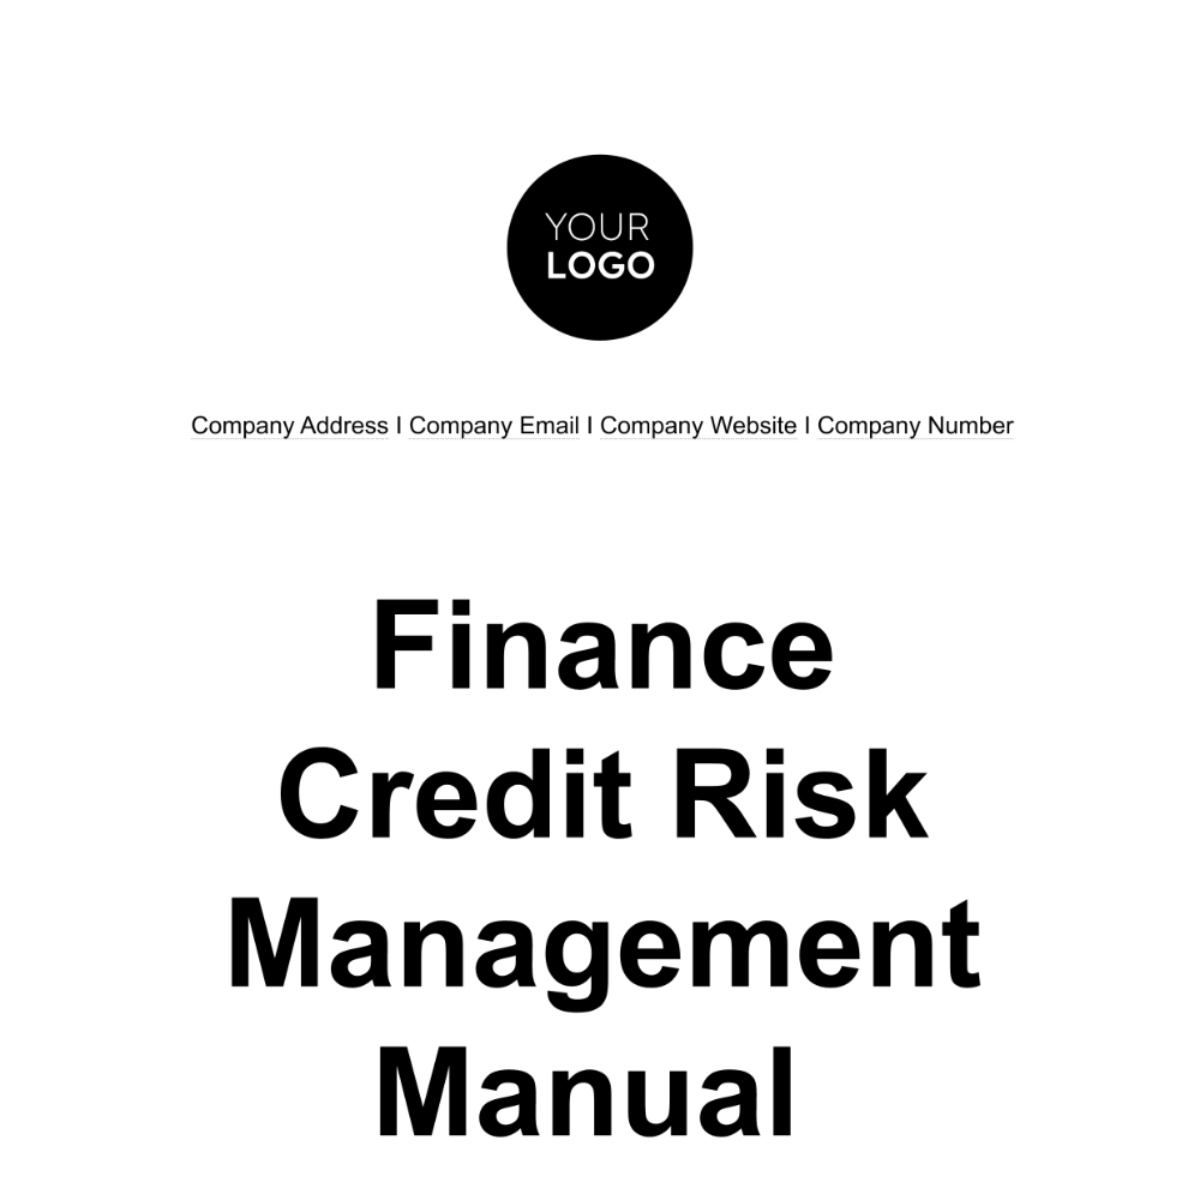 Finance Credit Risk Management Manual Template